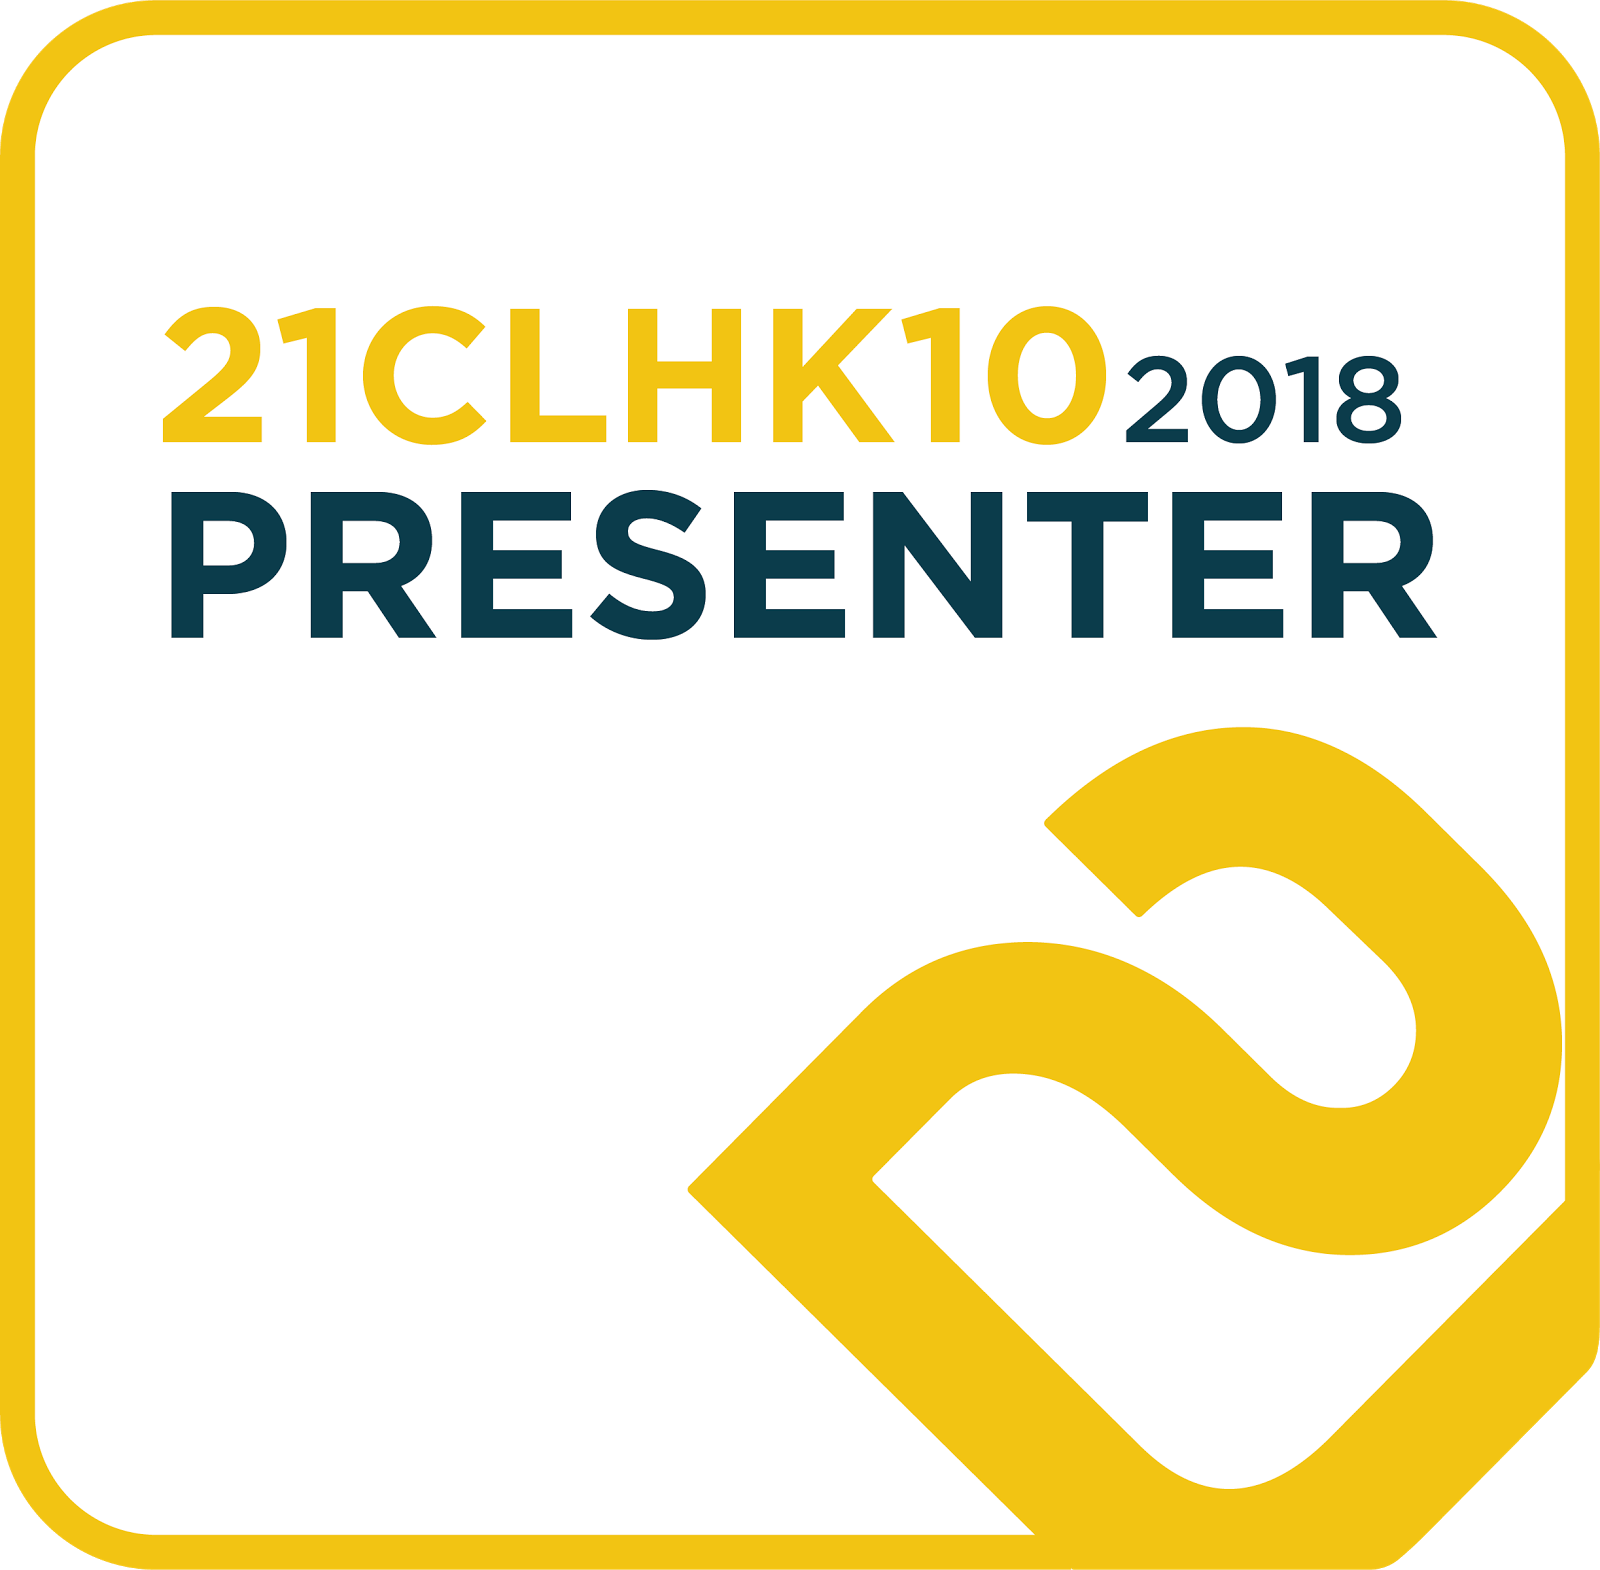 21CLHK Presenter